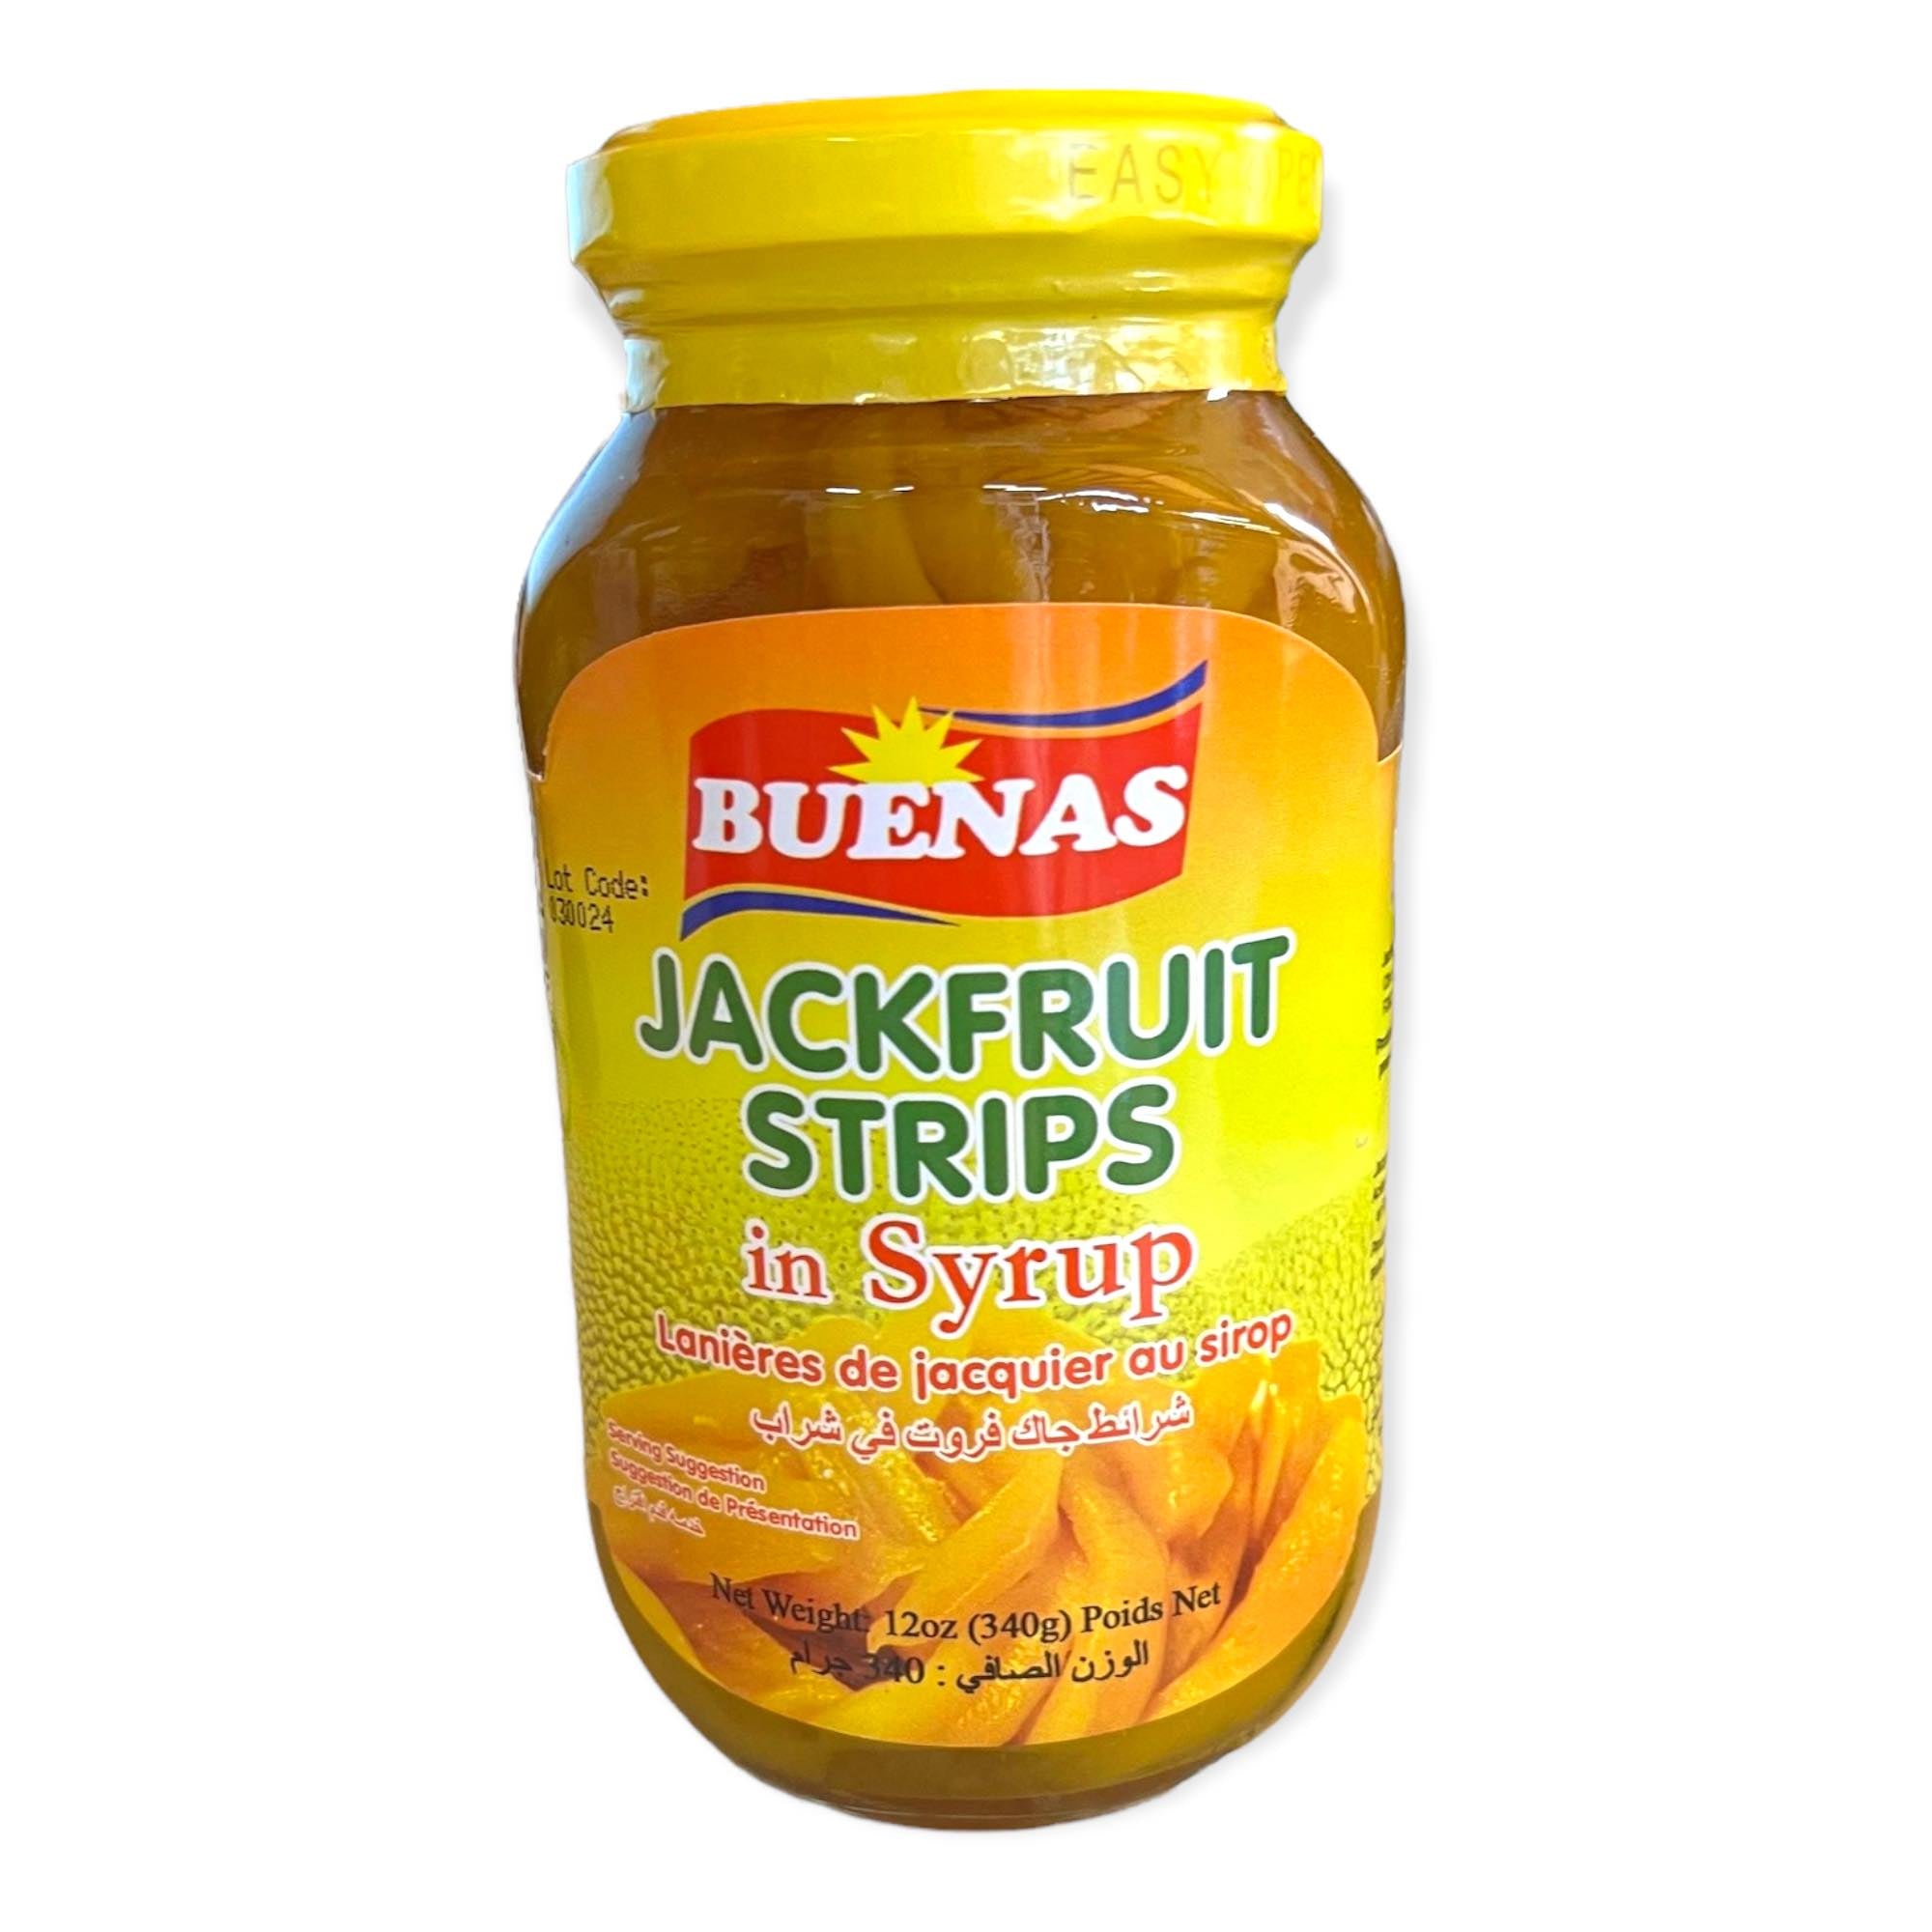 Buenas - Jackfruit Strips in Syrup - 12 OZ